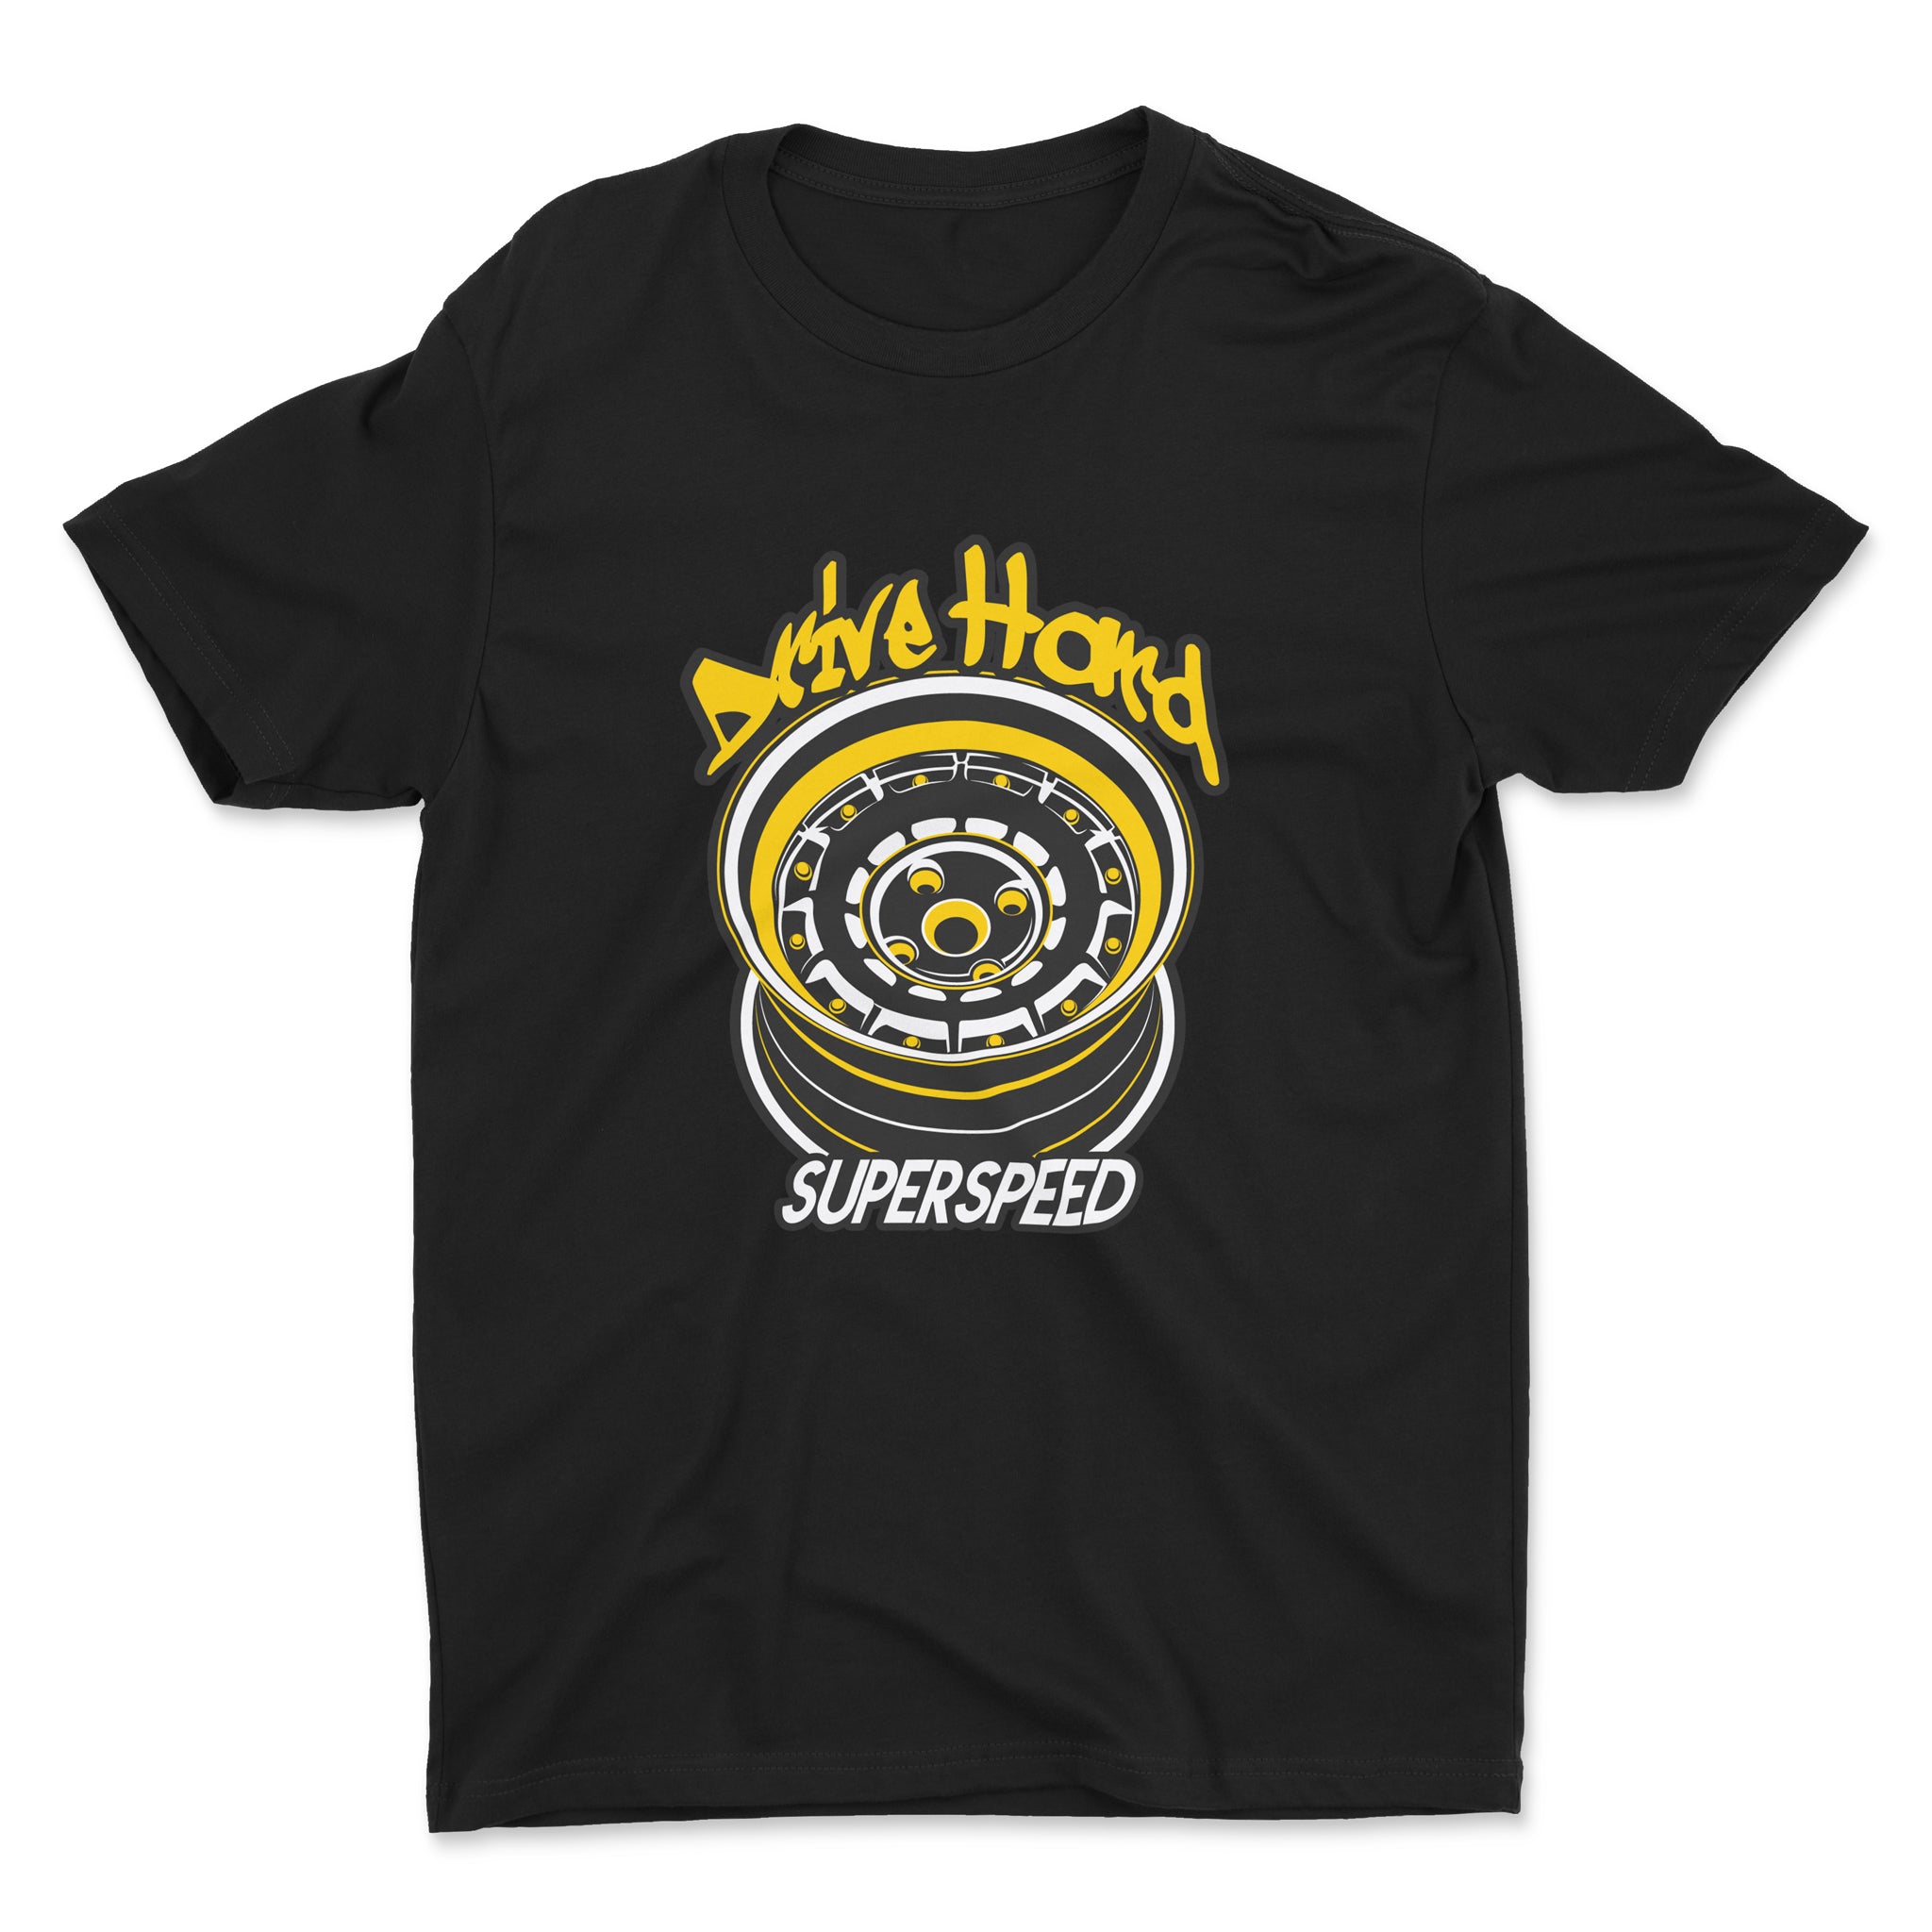 Drive Hard Super Speed - Car T-Shirt - Black.